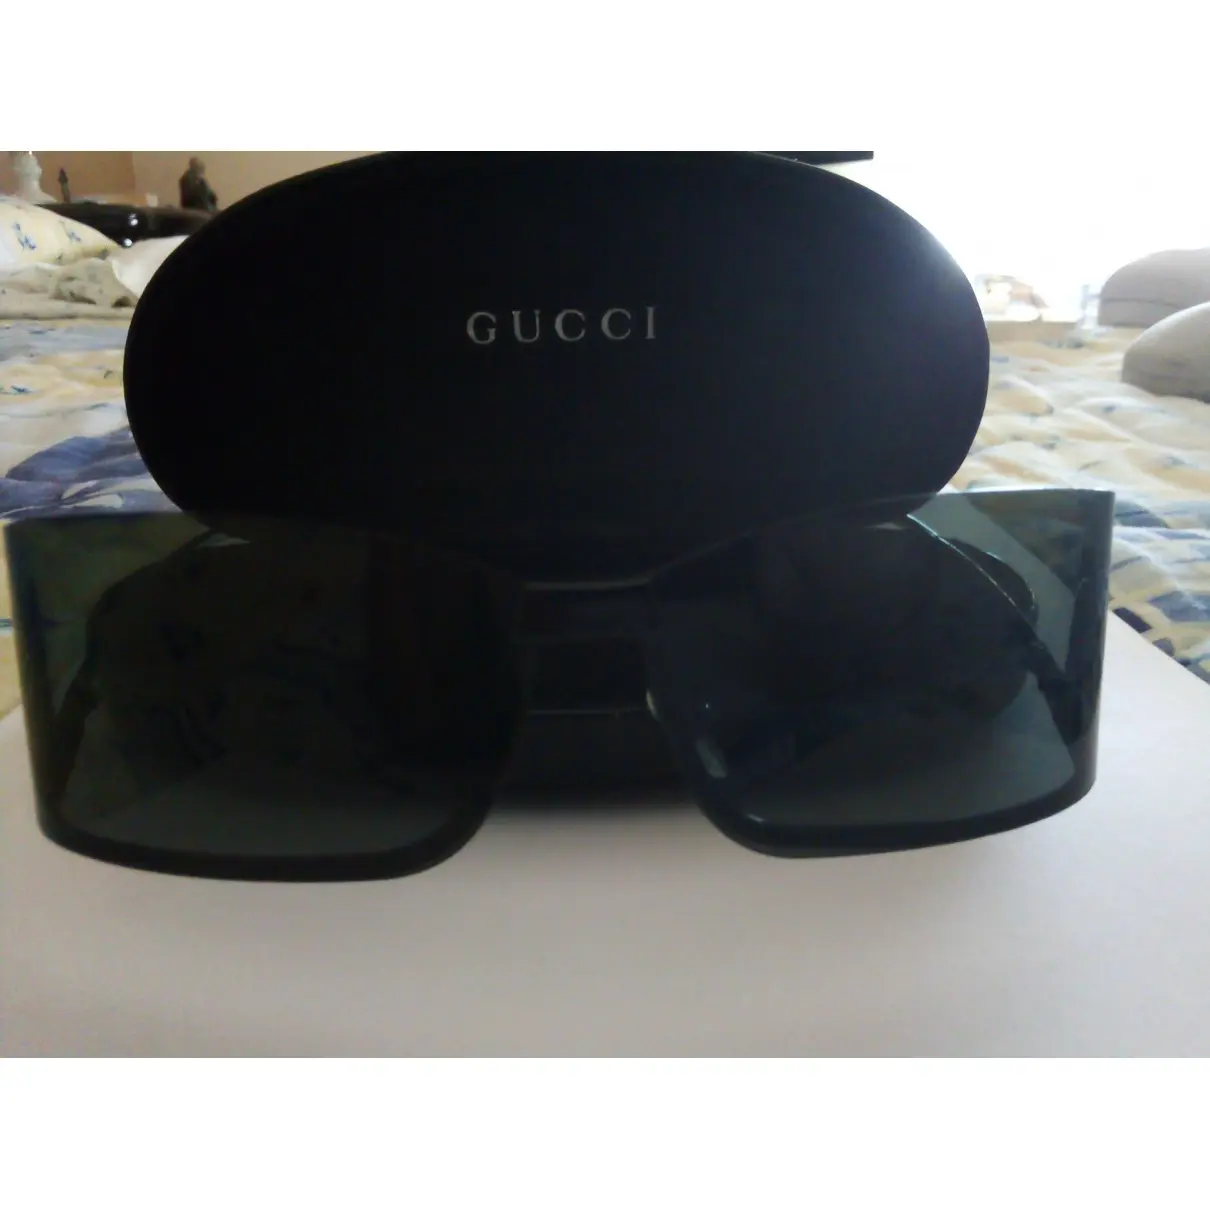 Luxury Gucci Sunglasses Women - Vintage